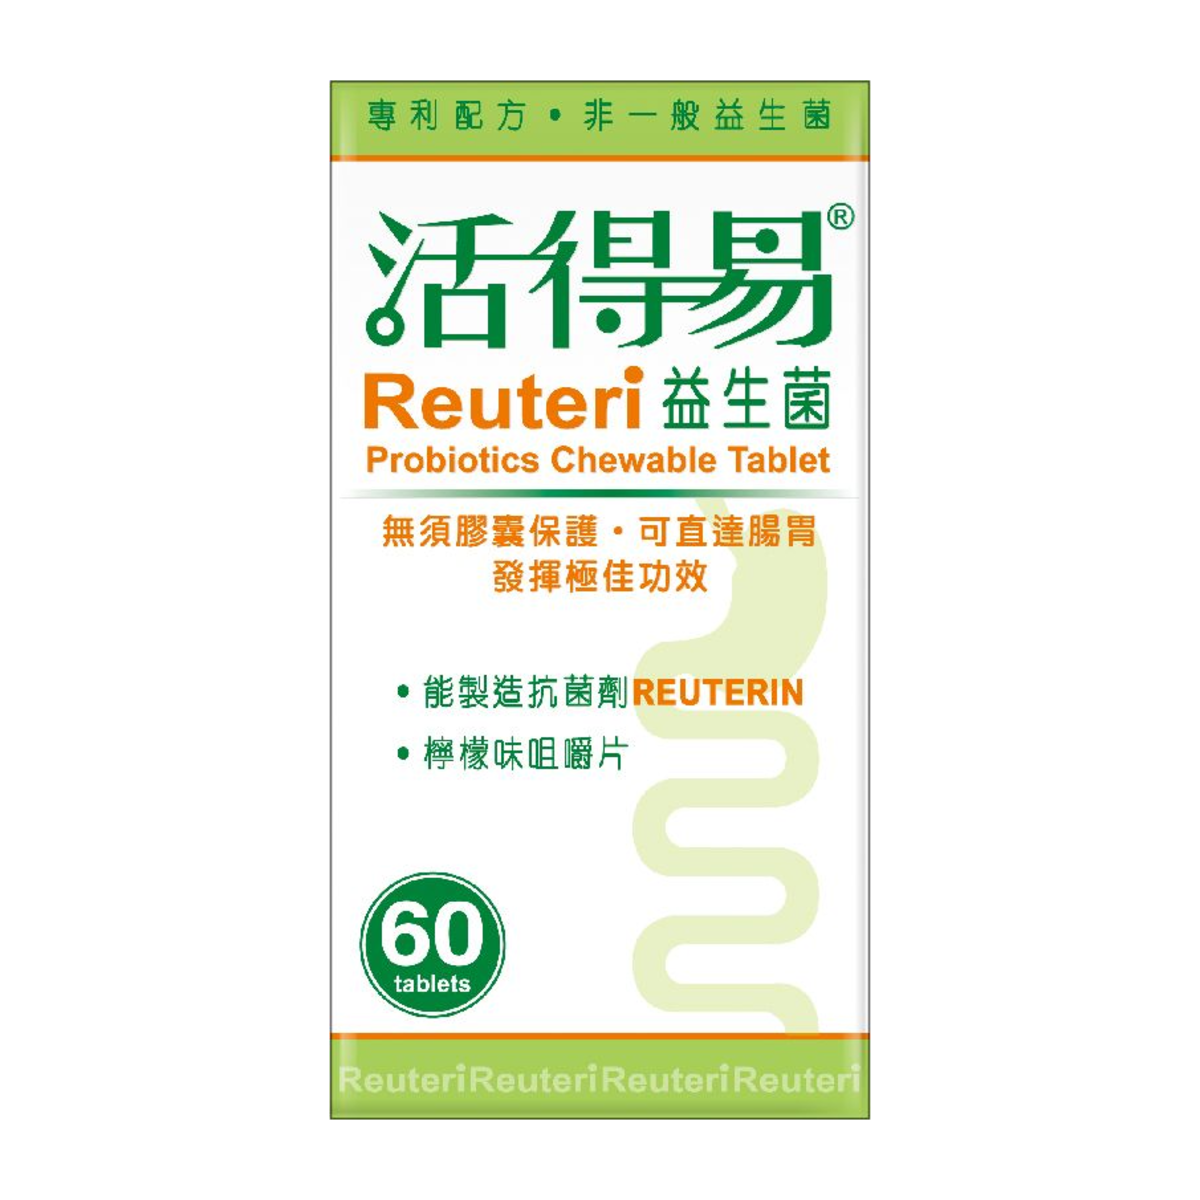 Reuteri Probiotics Chewable Tablet